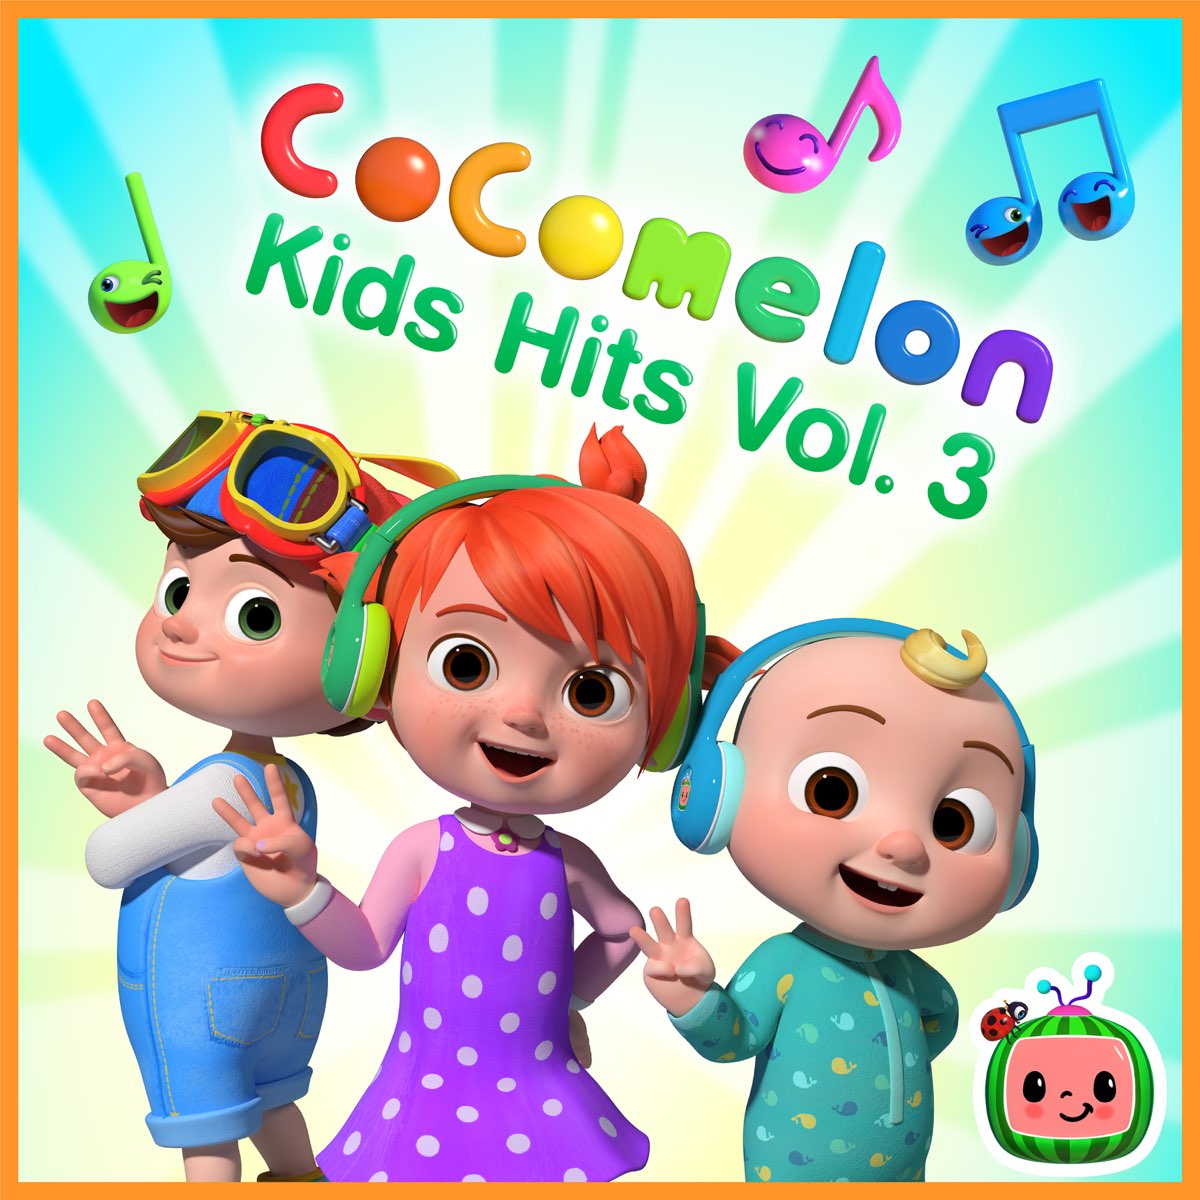 ‎CoComelon Kids Hits, Vol. 3 de CoComelon en Apple Music